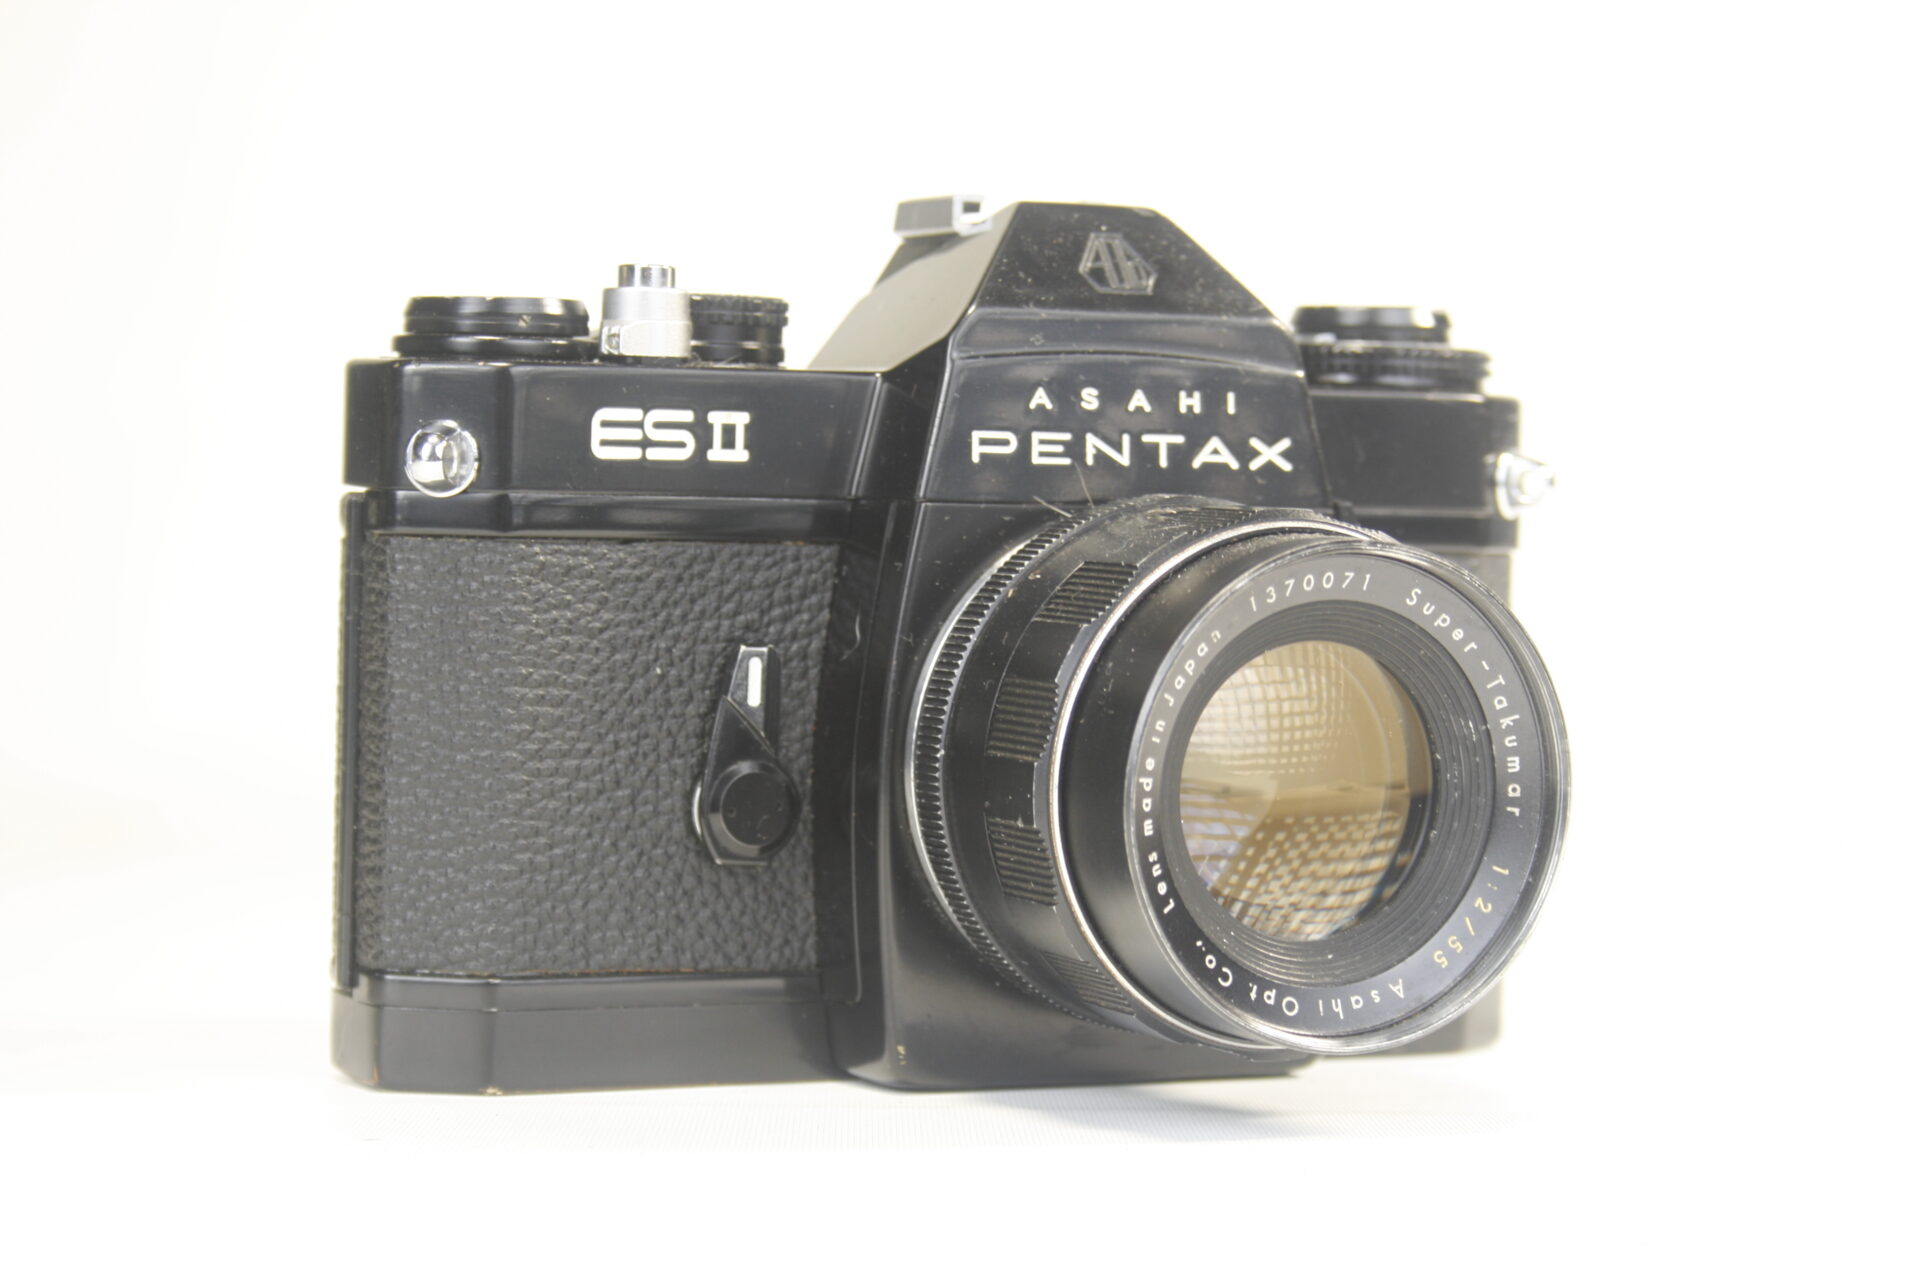 Pentax (Asahi) ES (Electro Spotmatic) II. 35mm SLR camera. 1973. Japan. Zwart